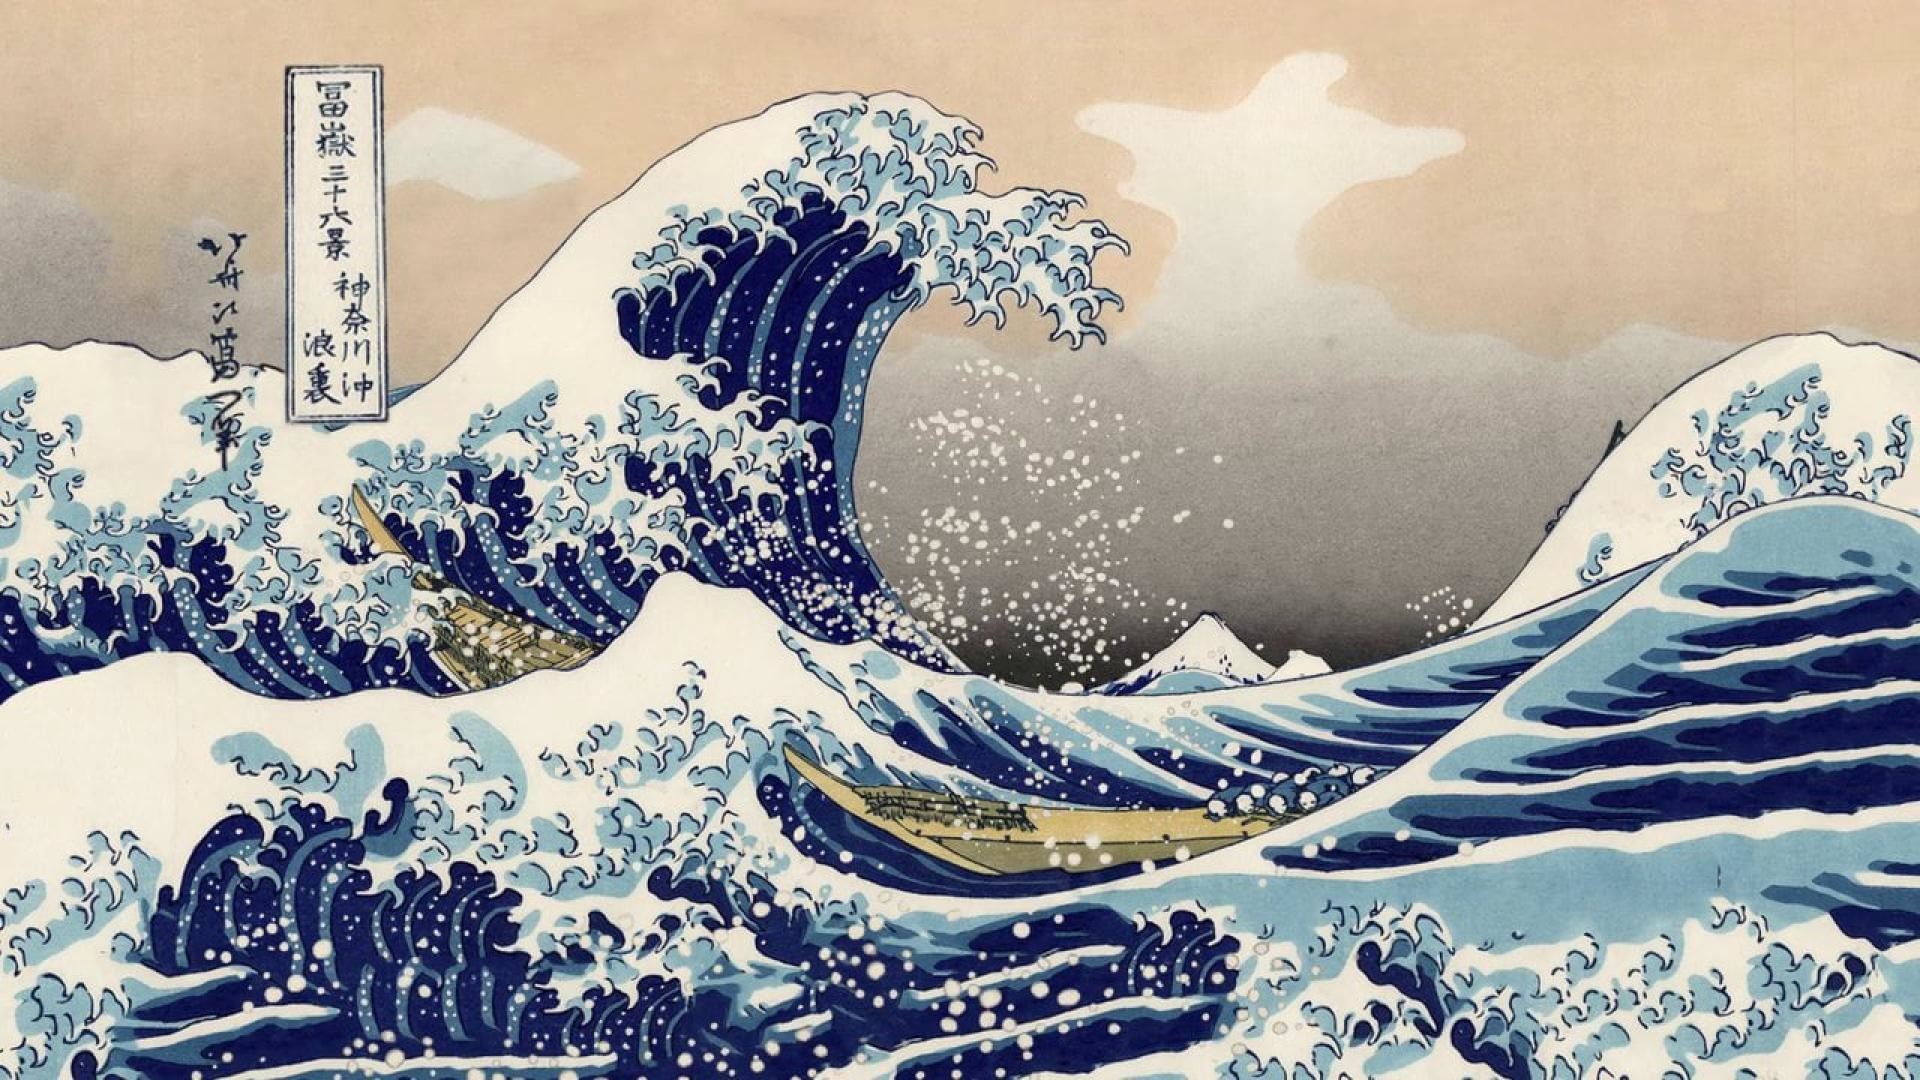 1920x1080 Great Wave Off Kanagawa Wallpaper Twx4w4h Wallimpex.